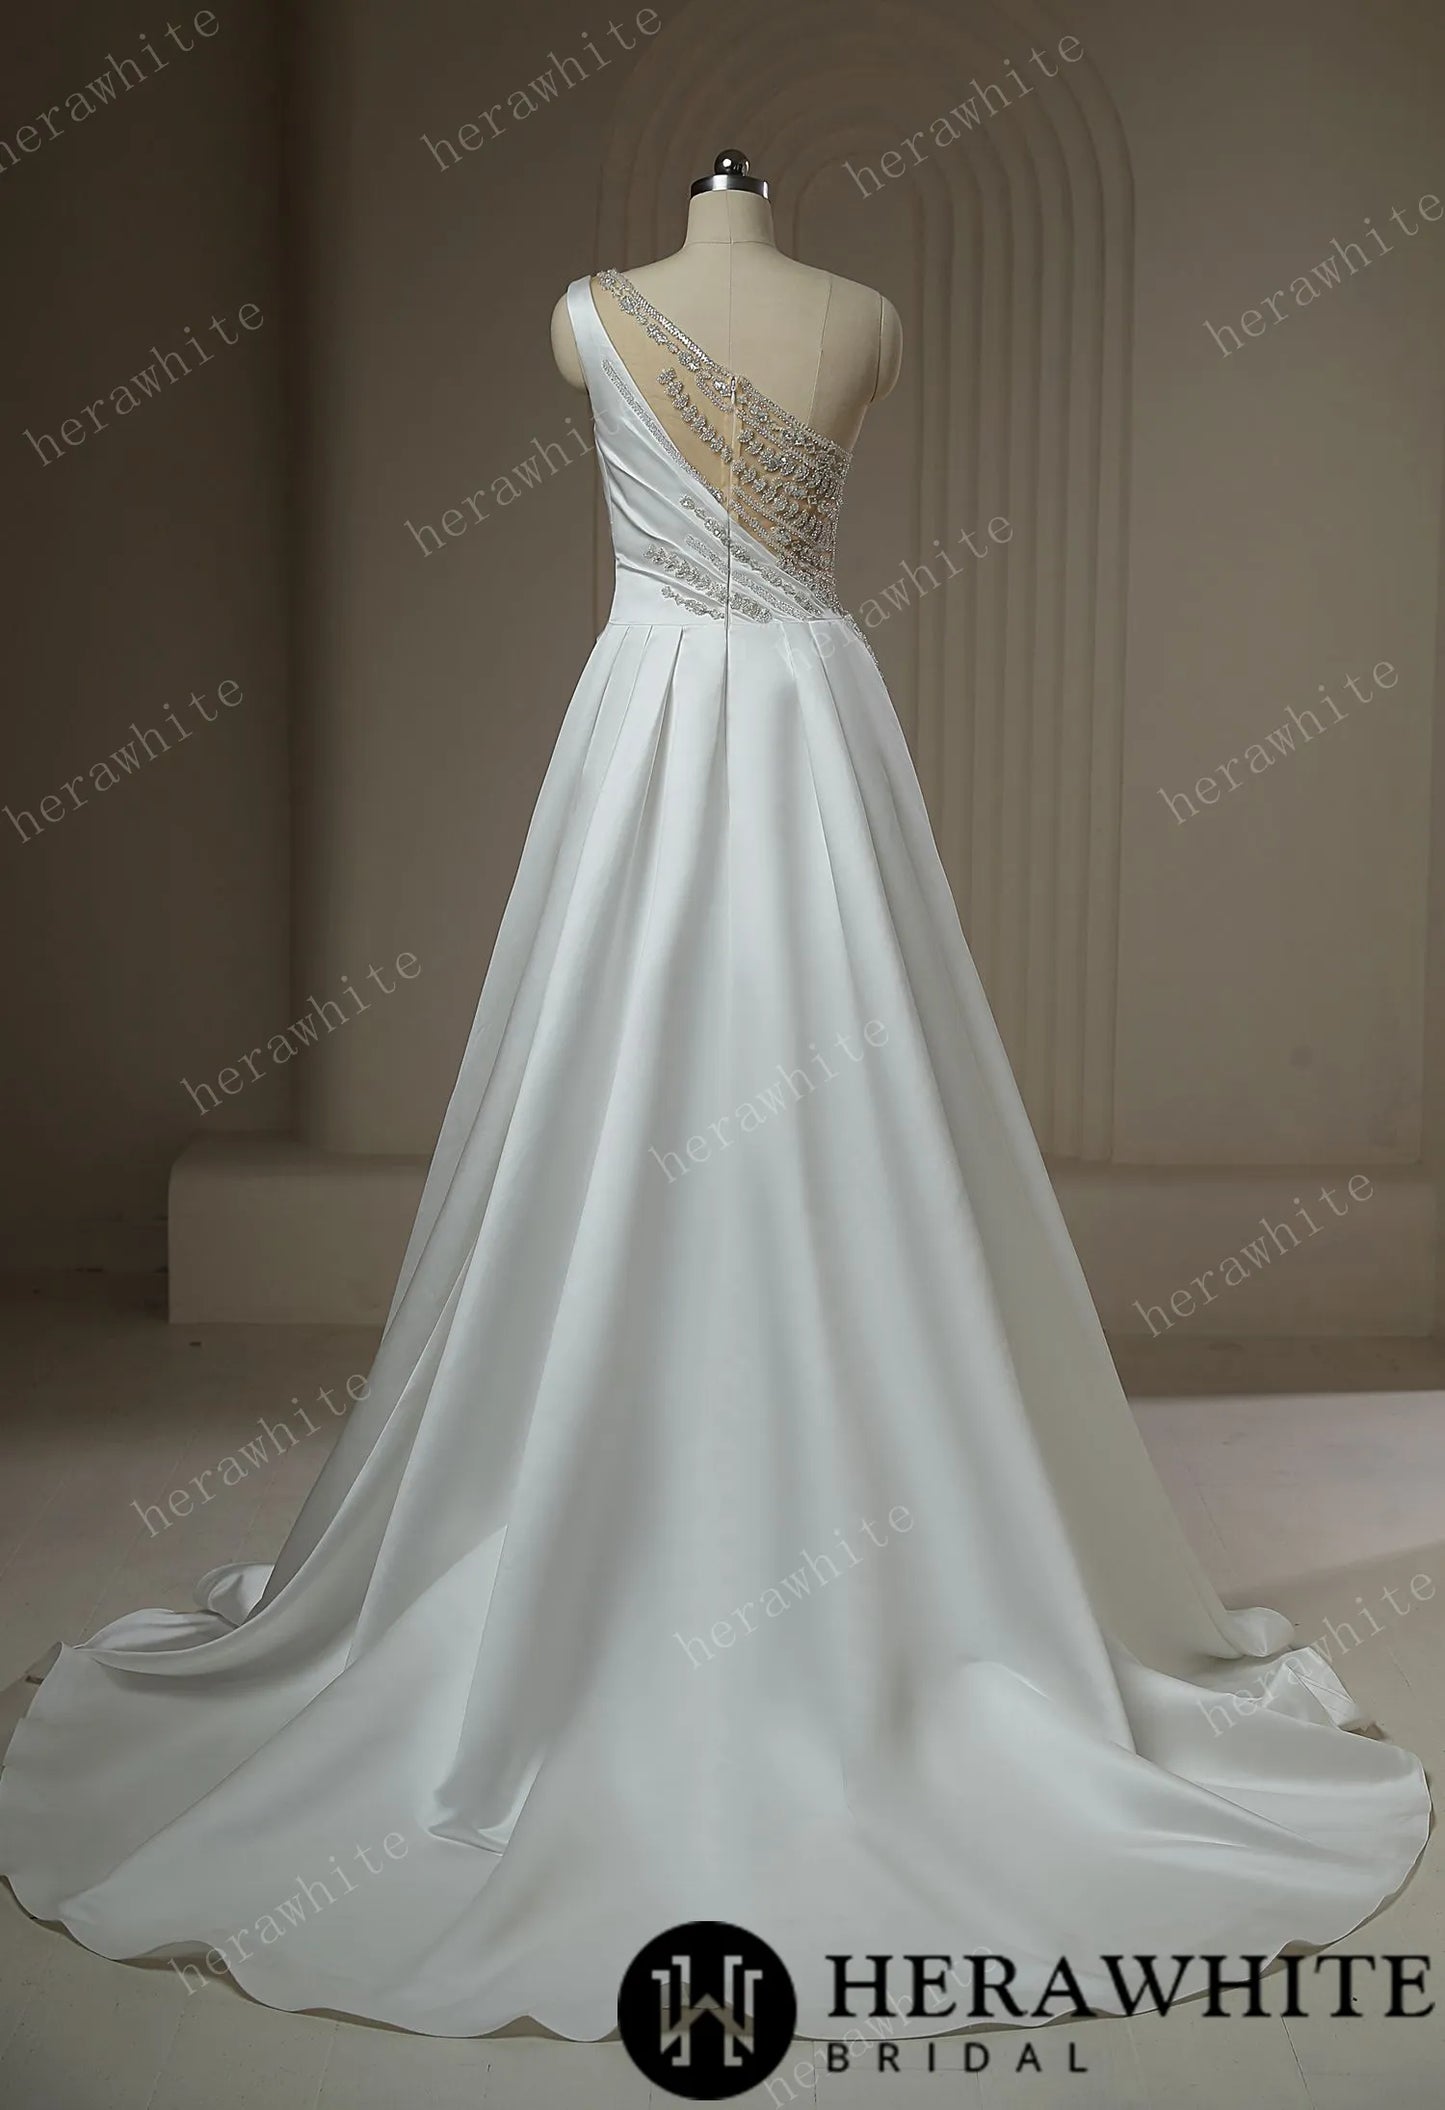 Rhinestone Draped Illusion Back Wedding Dress By HeraWhite